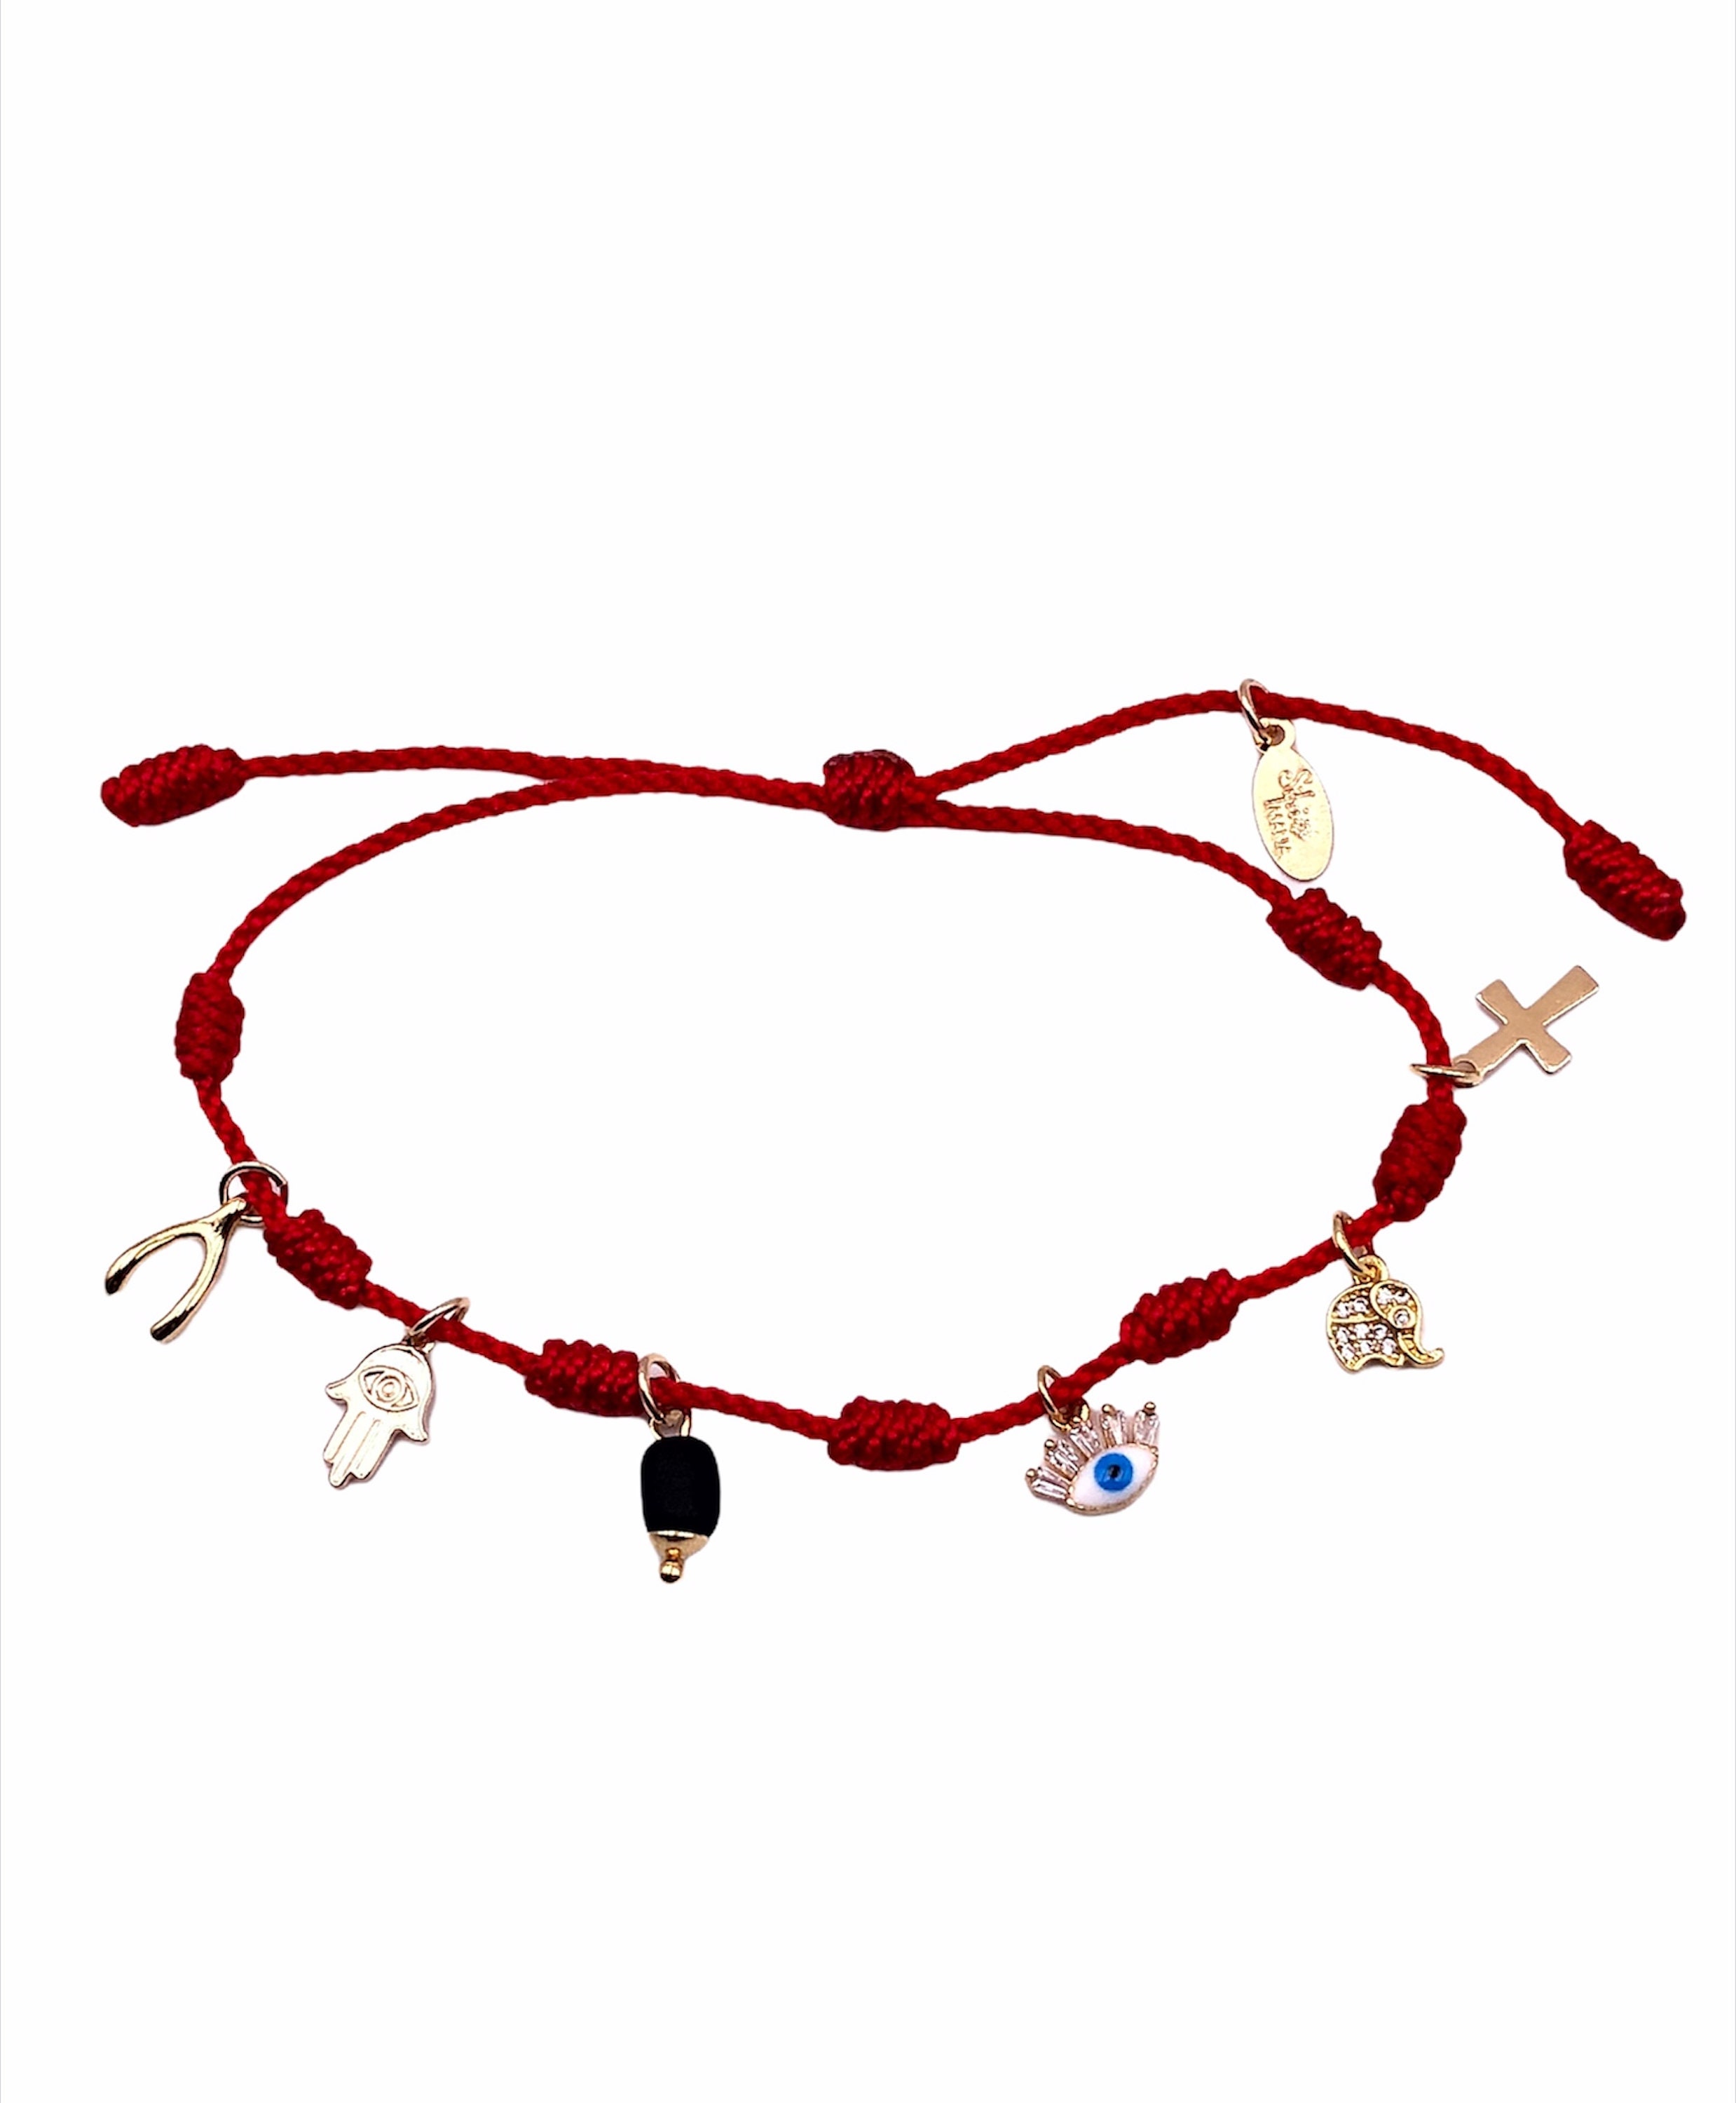 Red String Bracelet, Lucky Bracelet, Friendship Bracelets, Mal De Ojo,  Pulsera Liston Rojo, Kabbalah Red Bracelet, Pulsera Roja Trensada, 